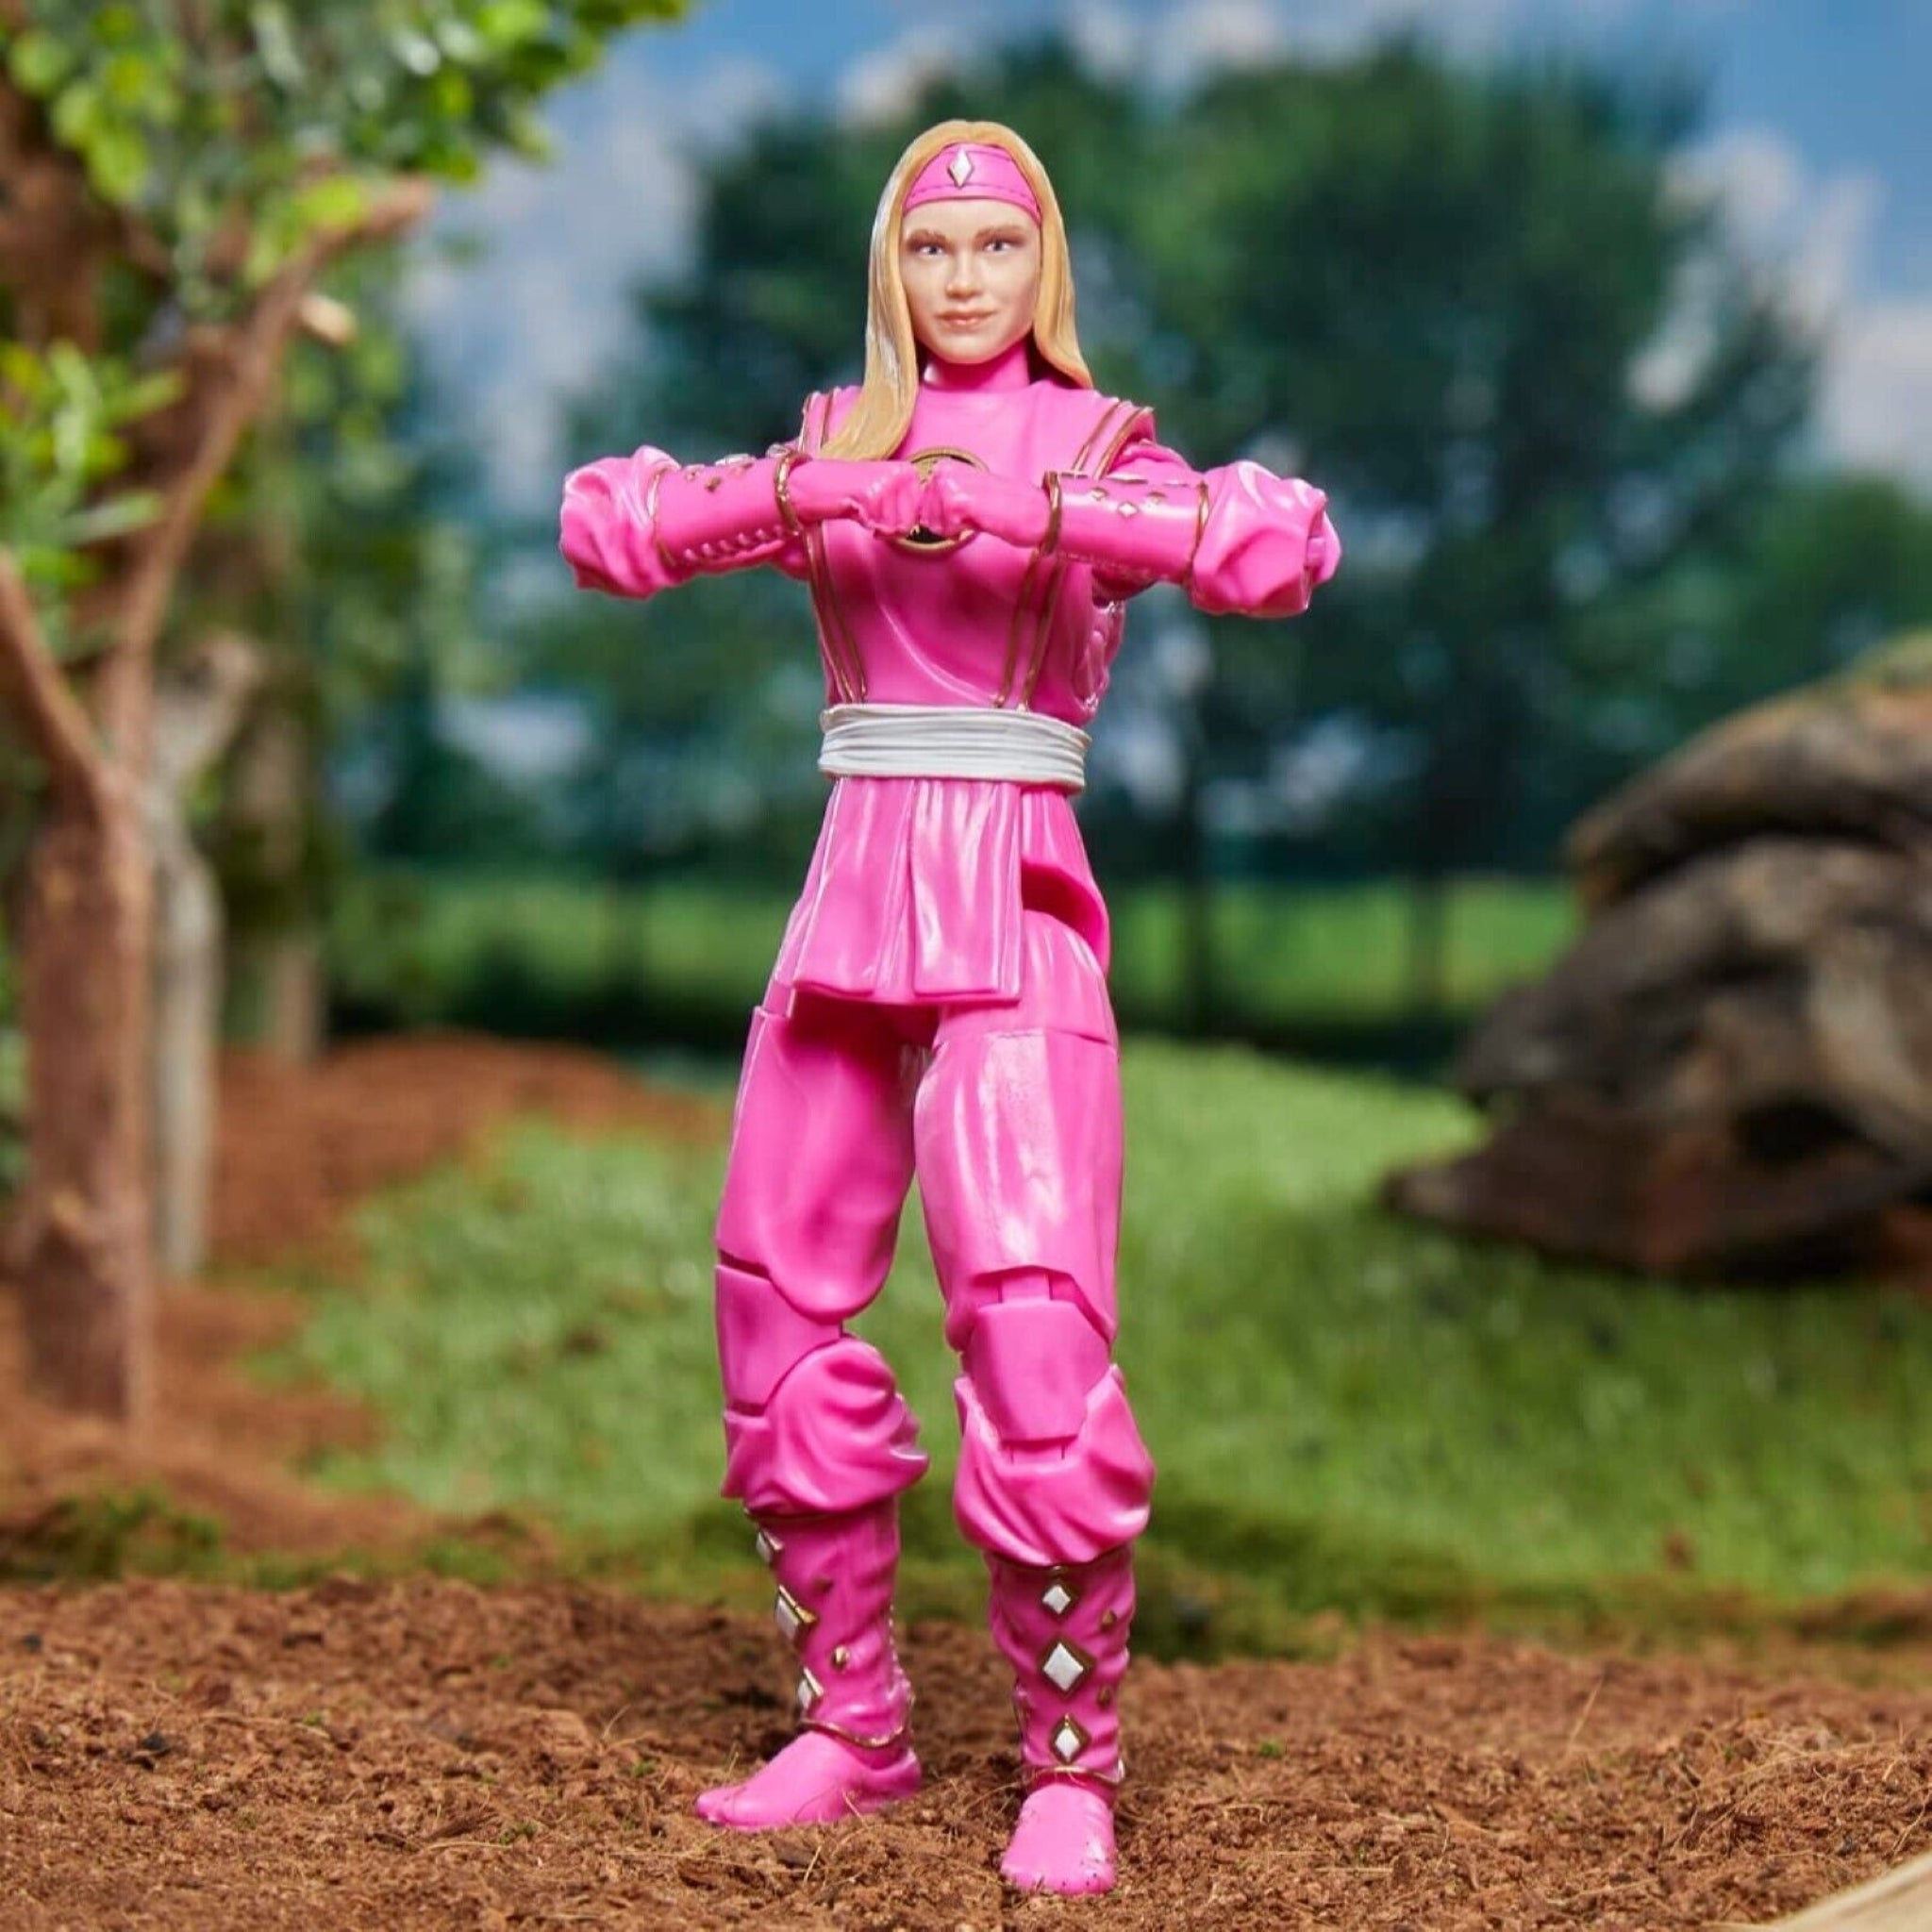 Hasbro Mighty Morphin Power Rangers Lightning Collection Ninja Pink Ranger